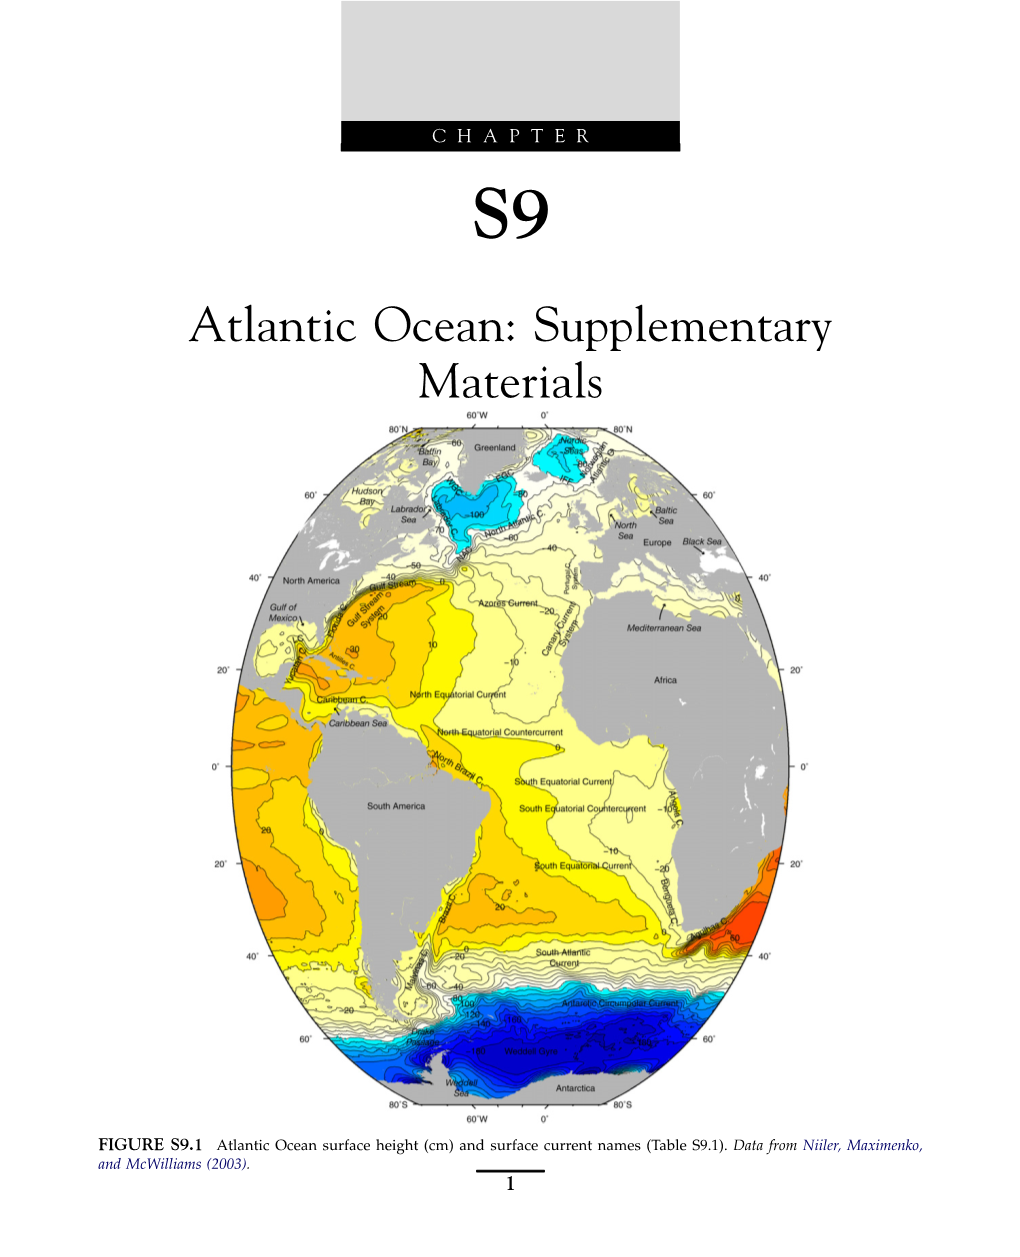 Atlantic Ocean: Supplementary Materials